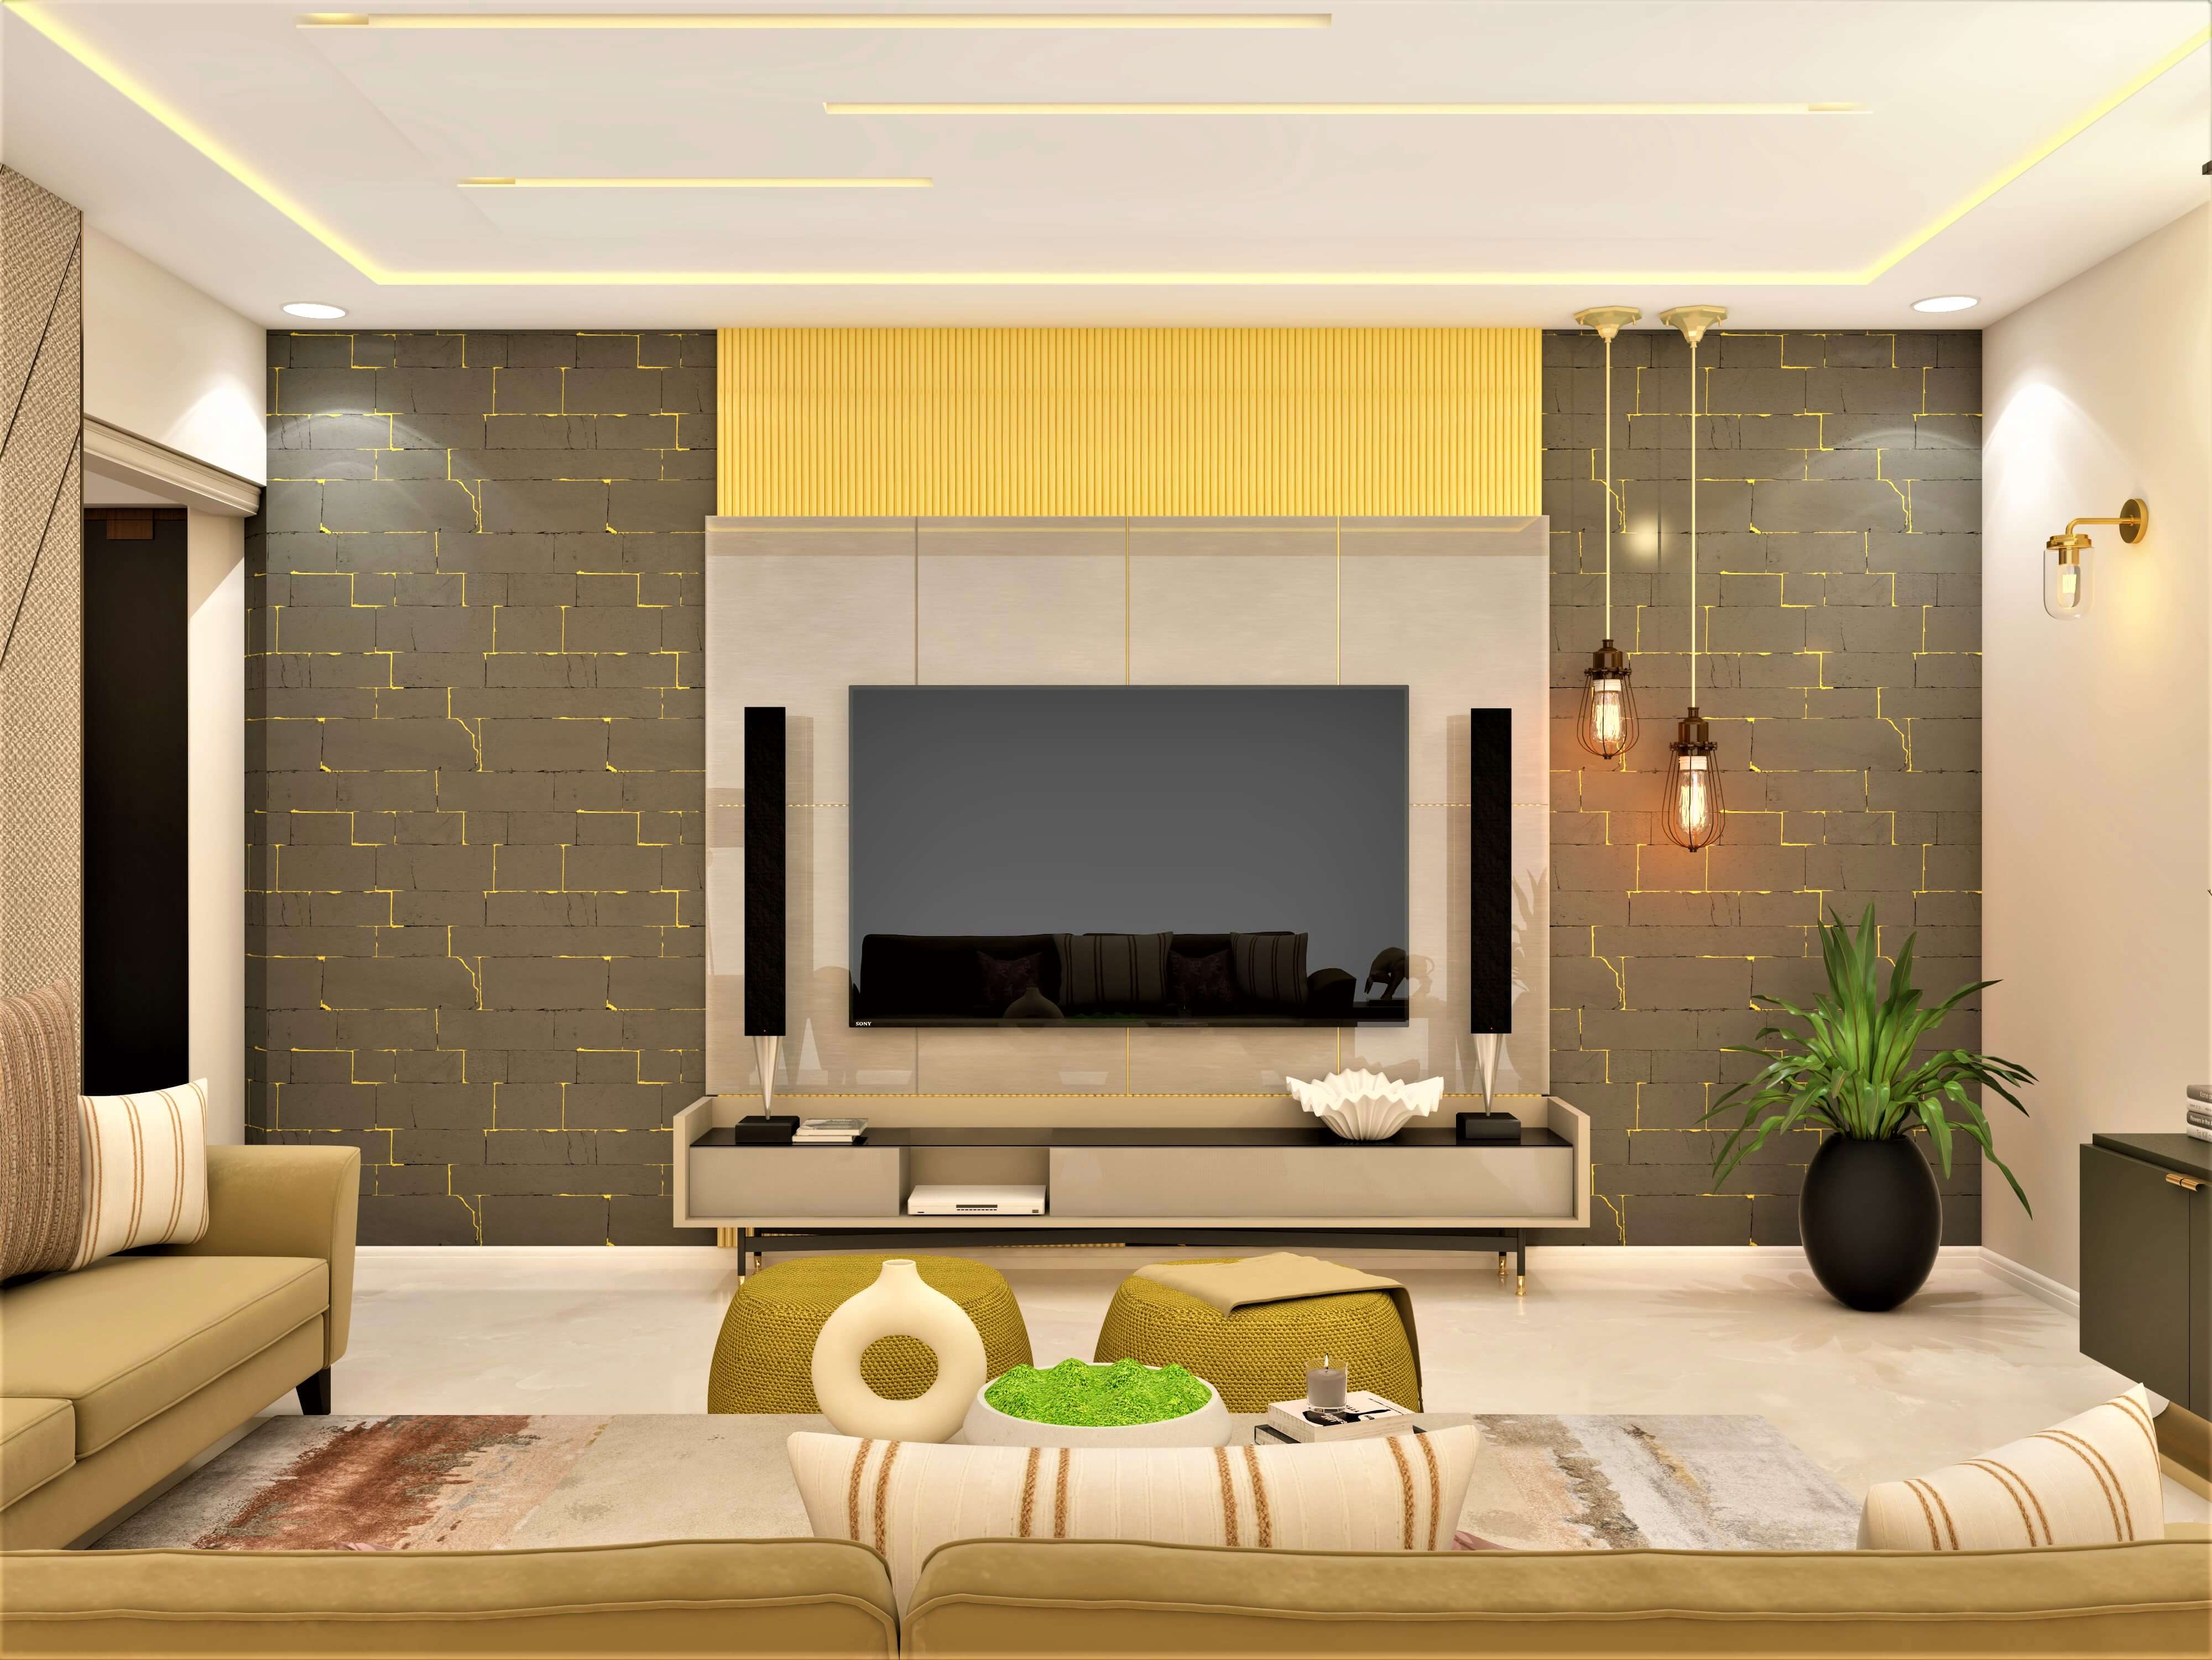 Neutral and elegant living room design - Beautiful Homes